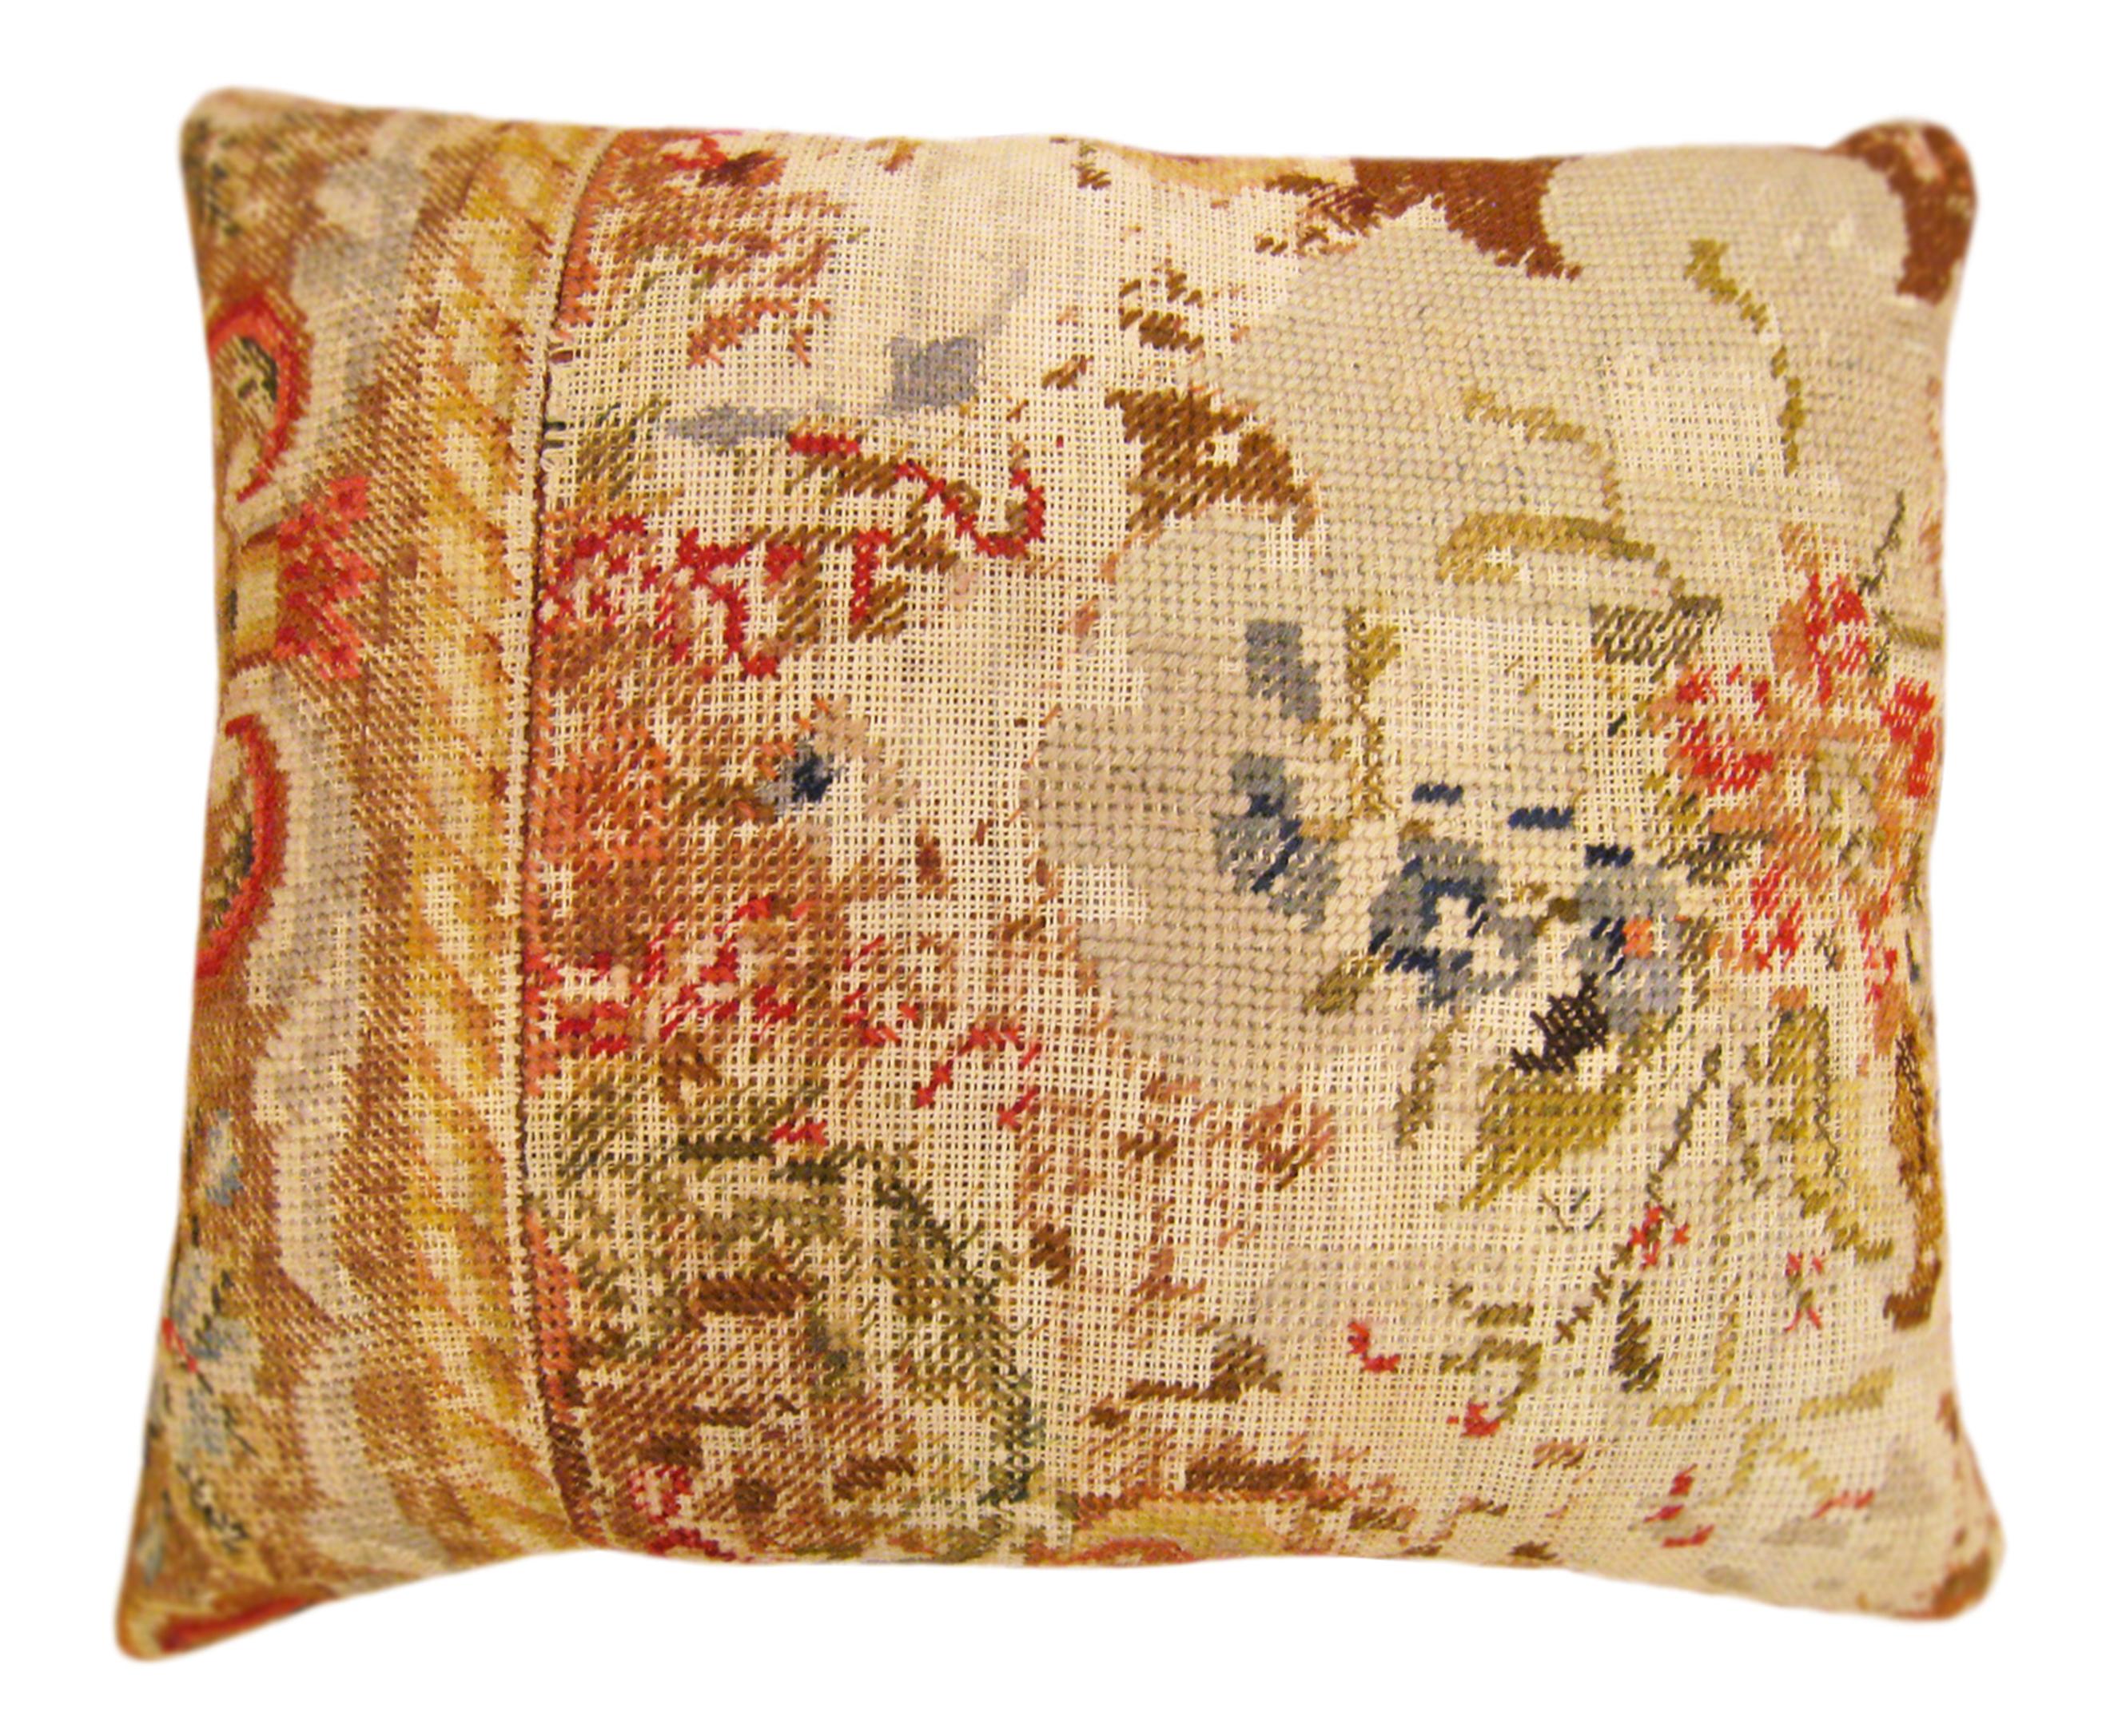 Pair of Vintage Decorative English Needlepoint Pillows, Terracotta Linen Backing 1